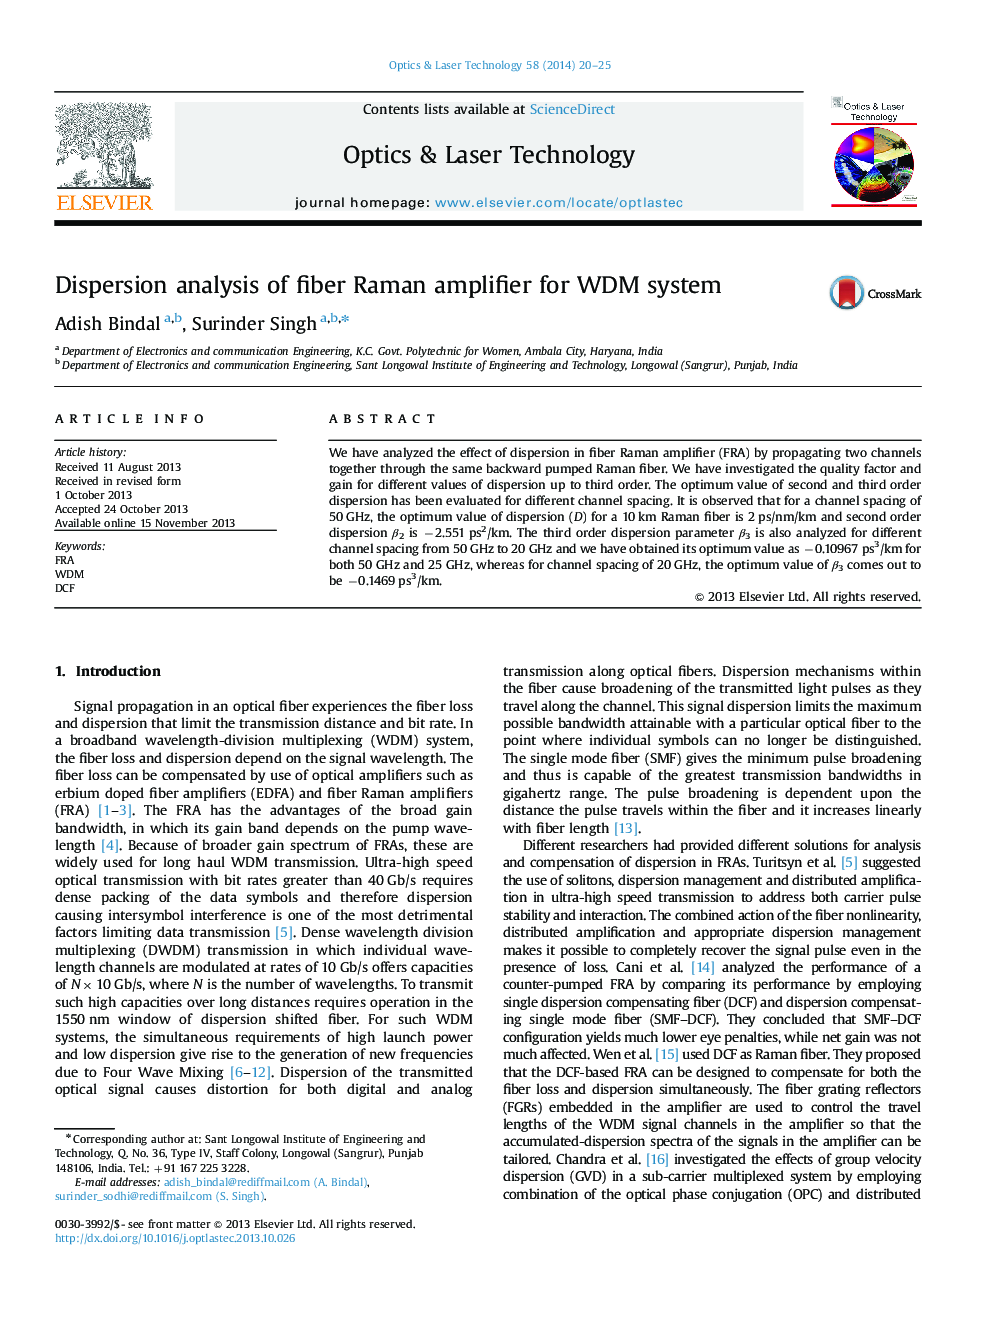 Dispersion analysis of fiber Raman amplifier for WDM system